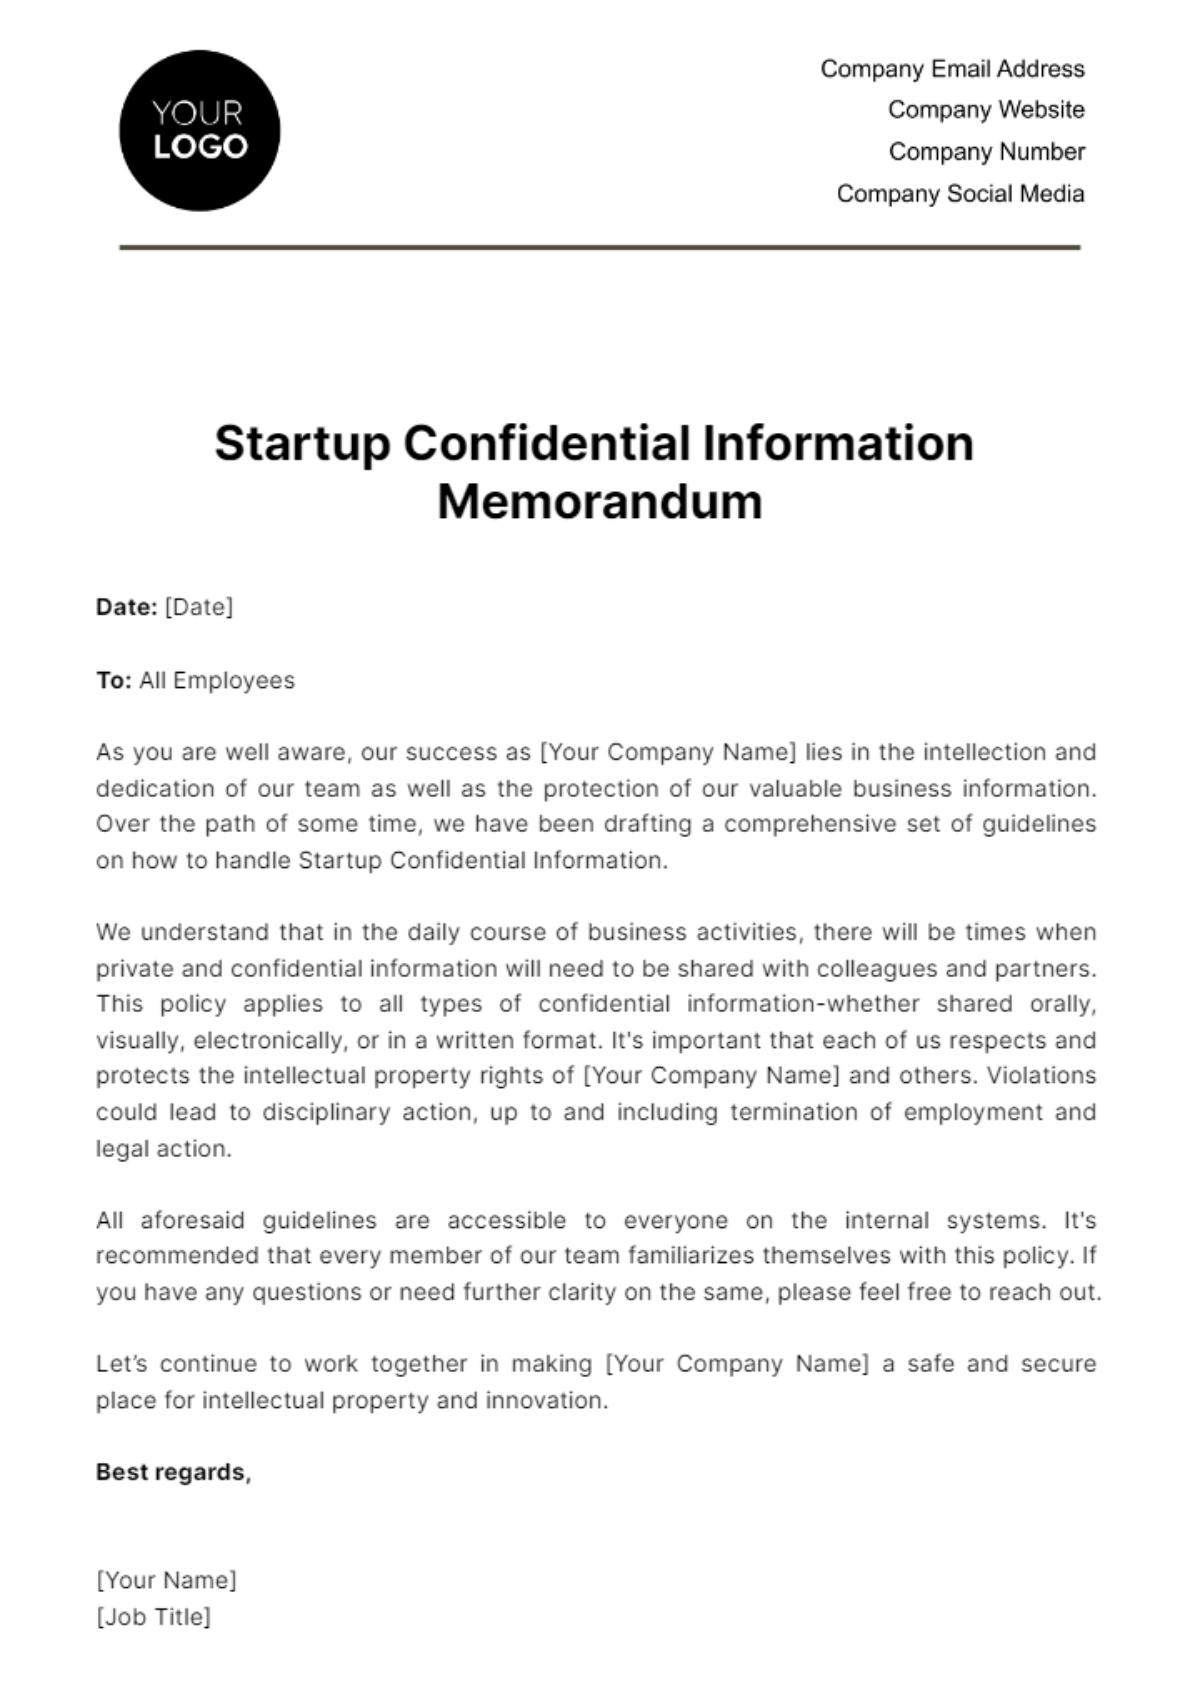 Startup Confidential Information Memorandum Template